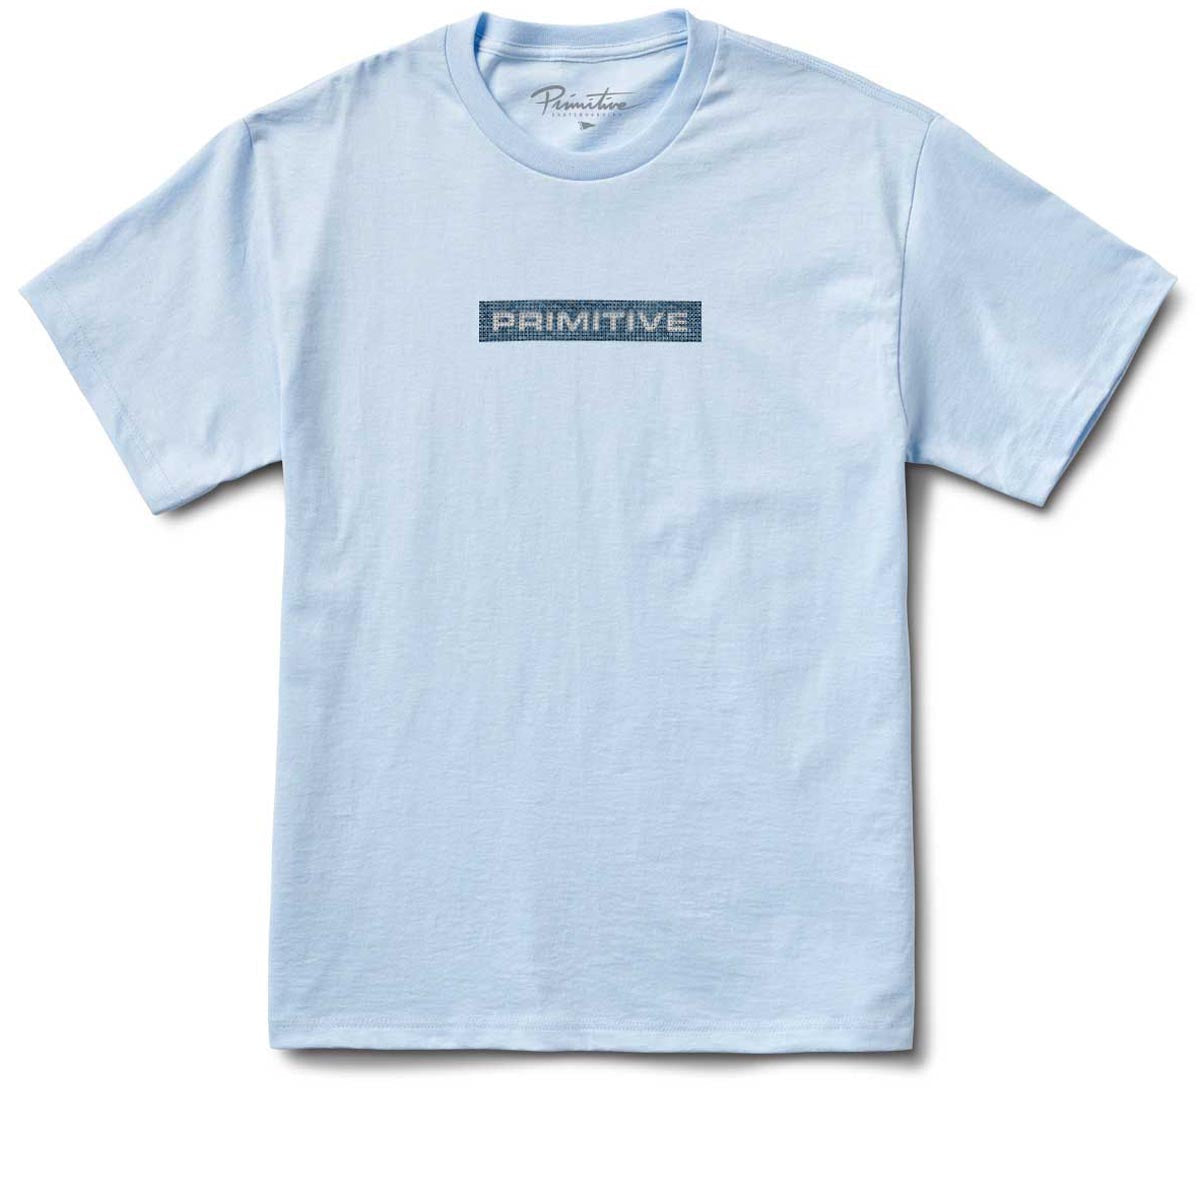 Primitive Boxed Rhinestone T-Shirt - Light Blue image 1